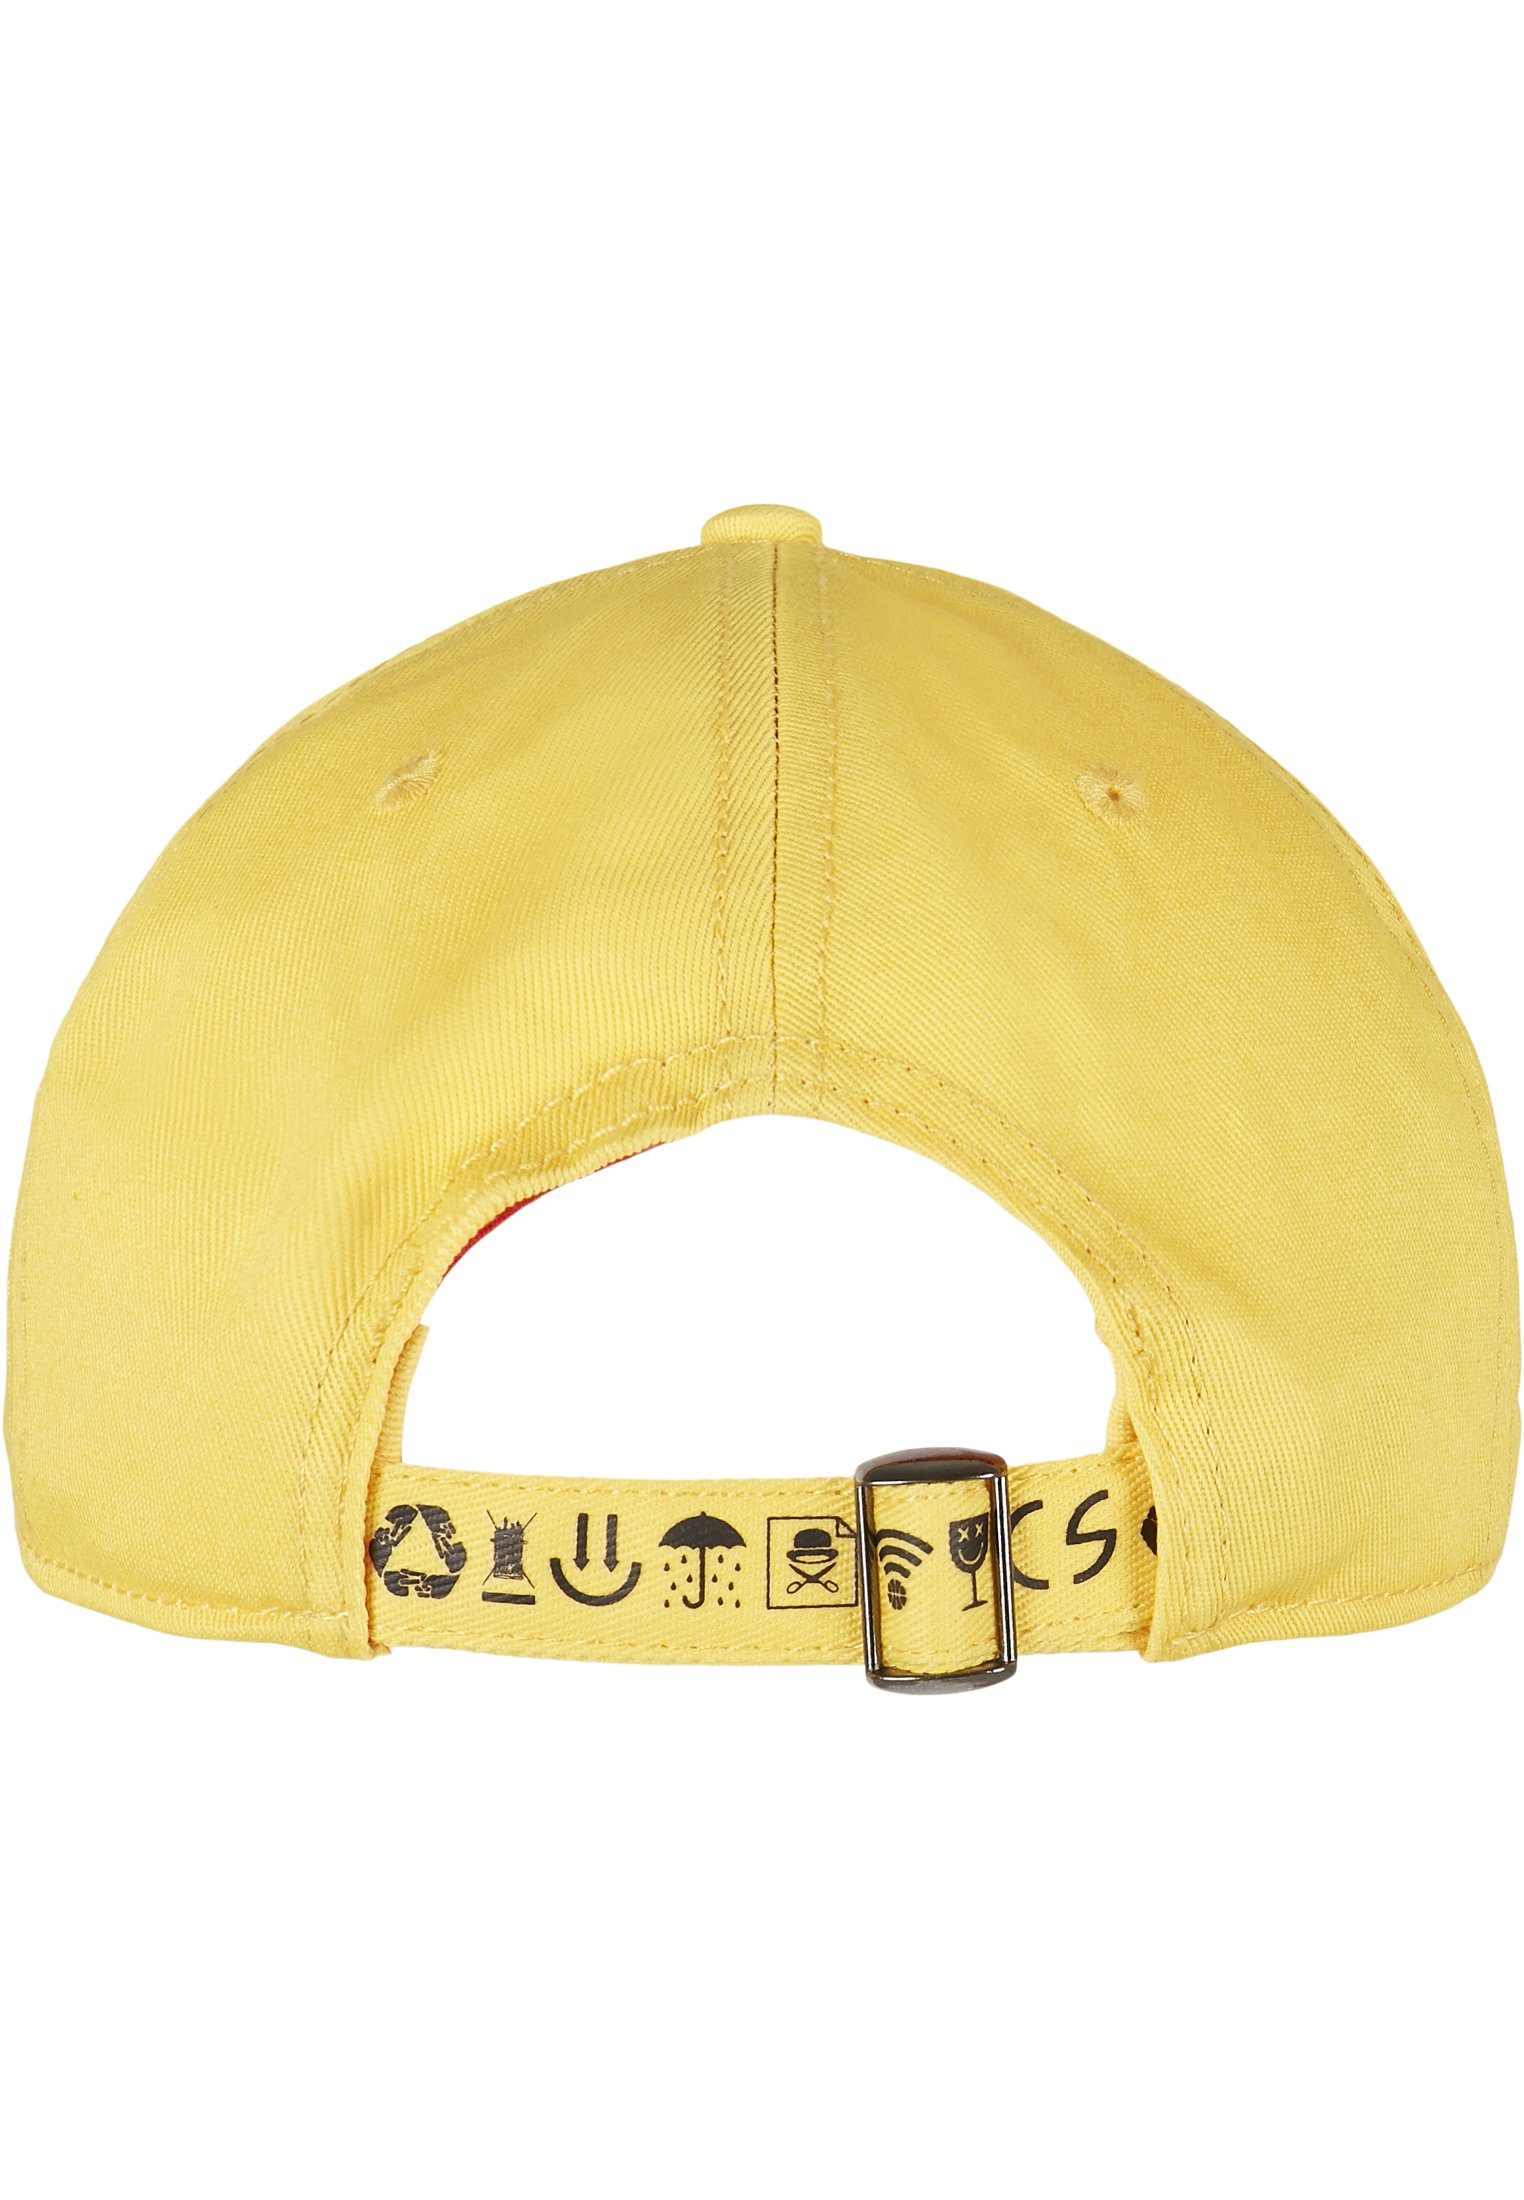 Flex CAYLER Cap SONS Iconic & yellow/multicolor C&S Curved Cap Peace